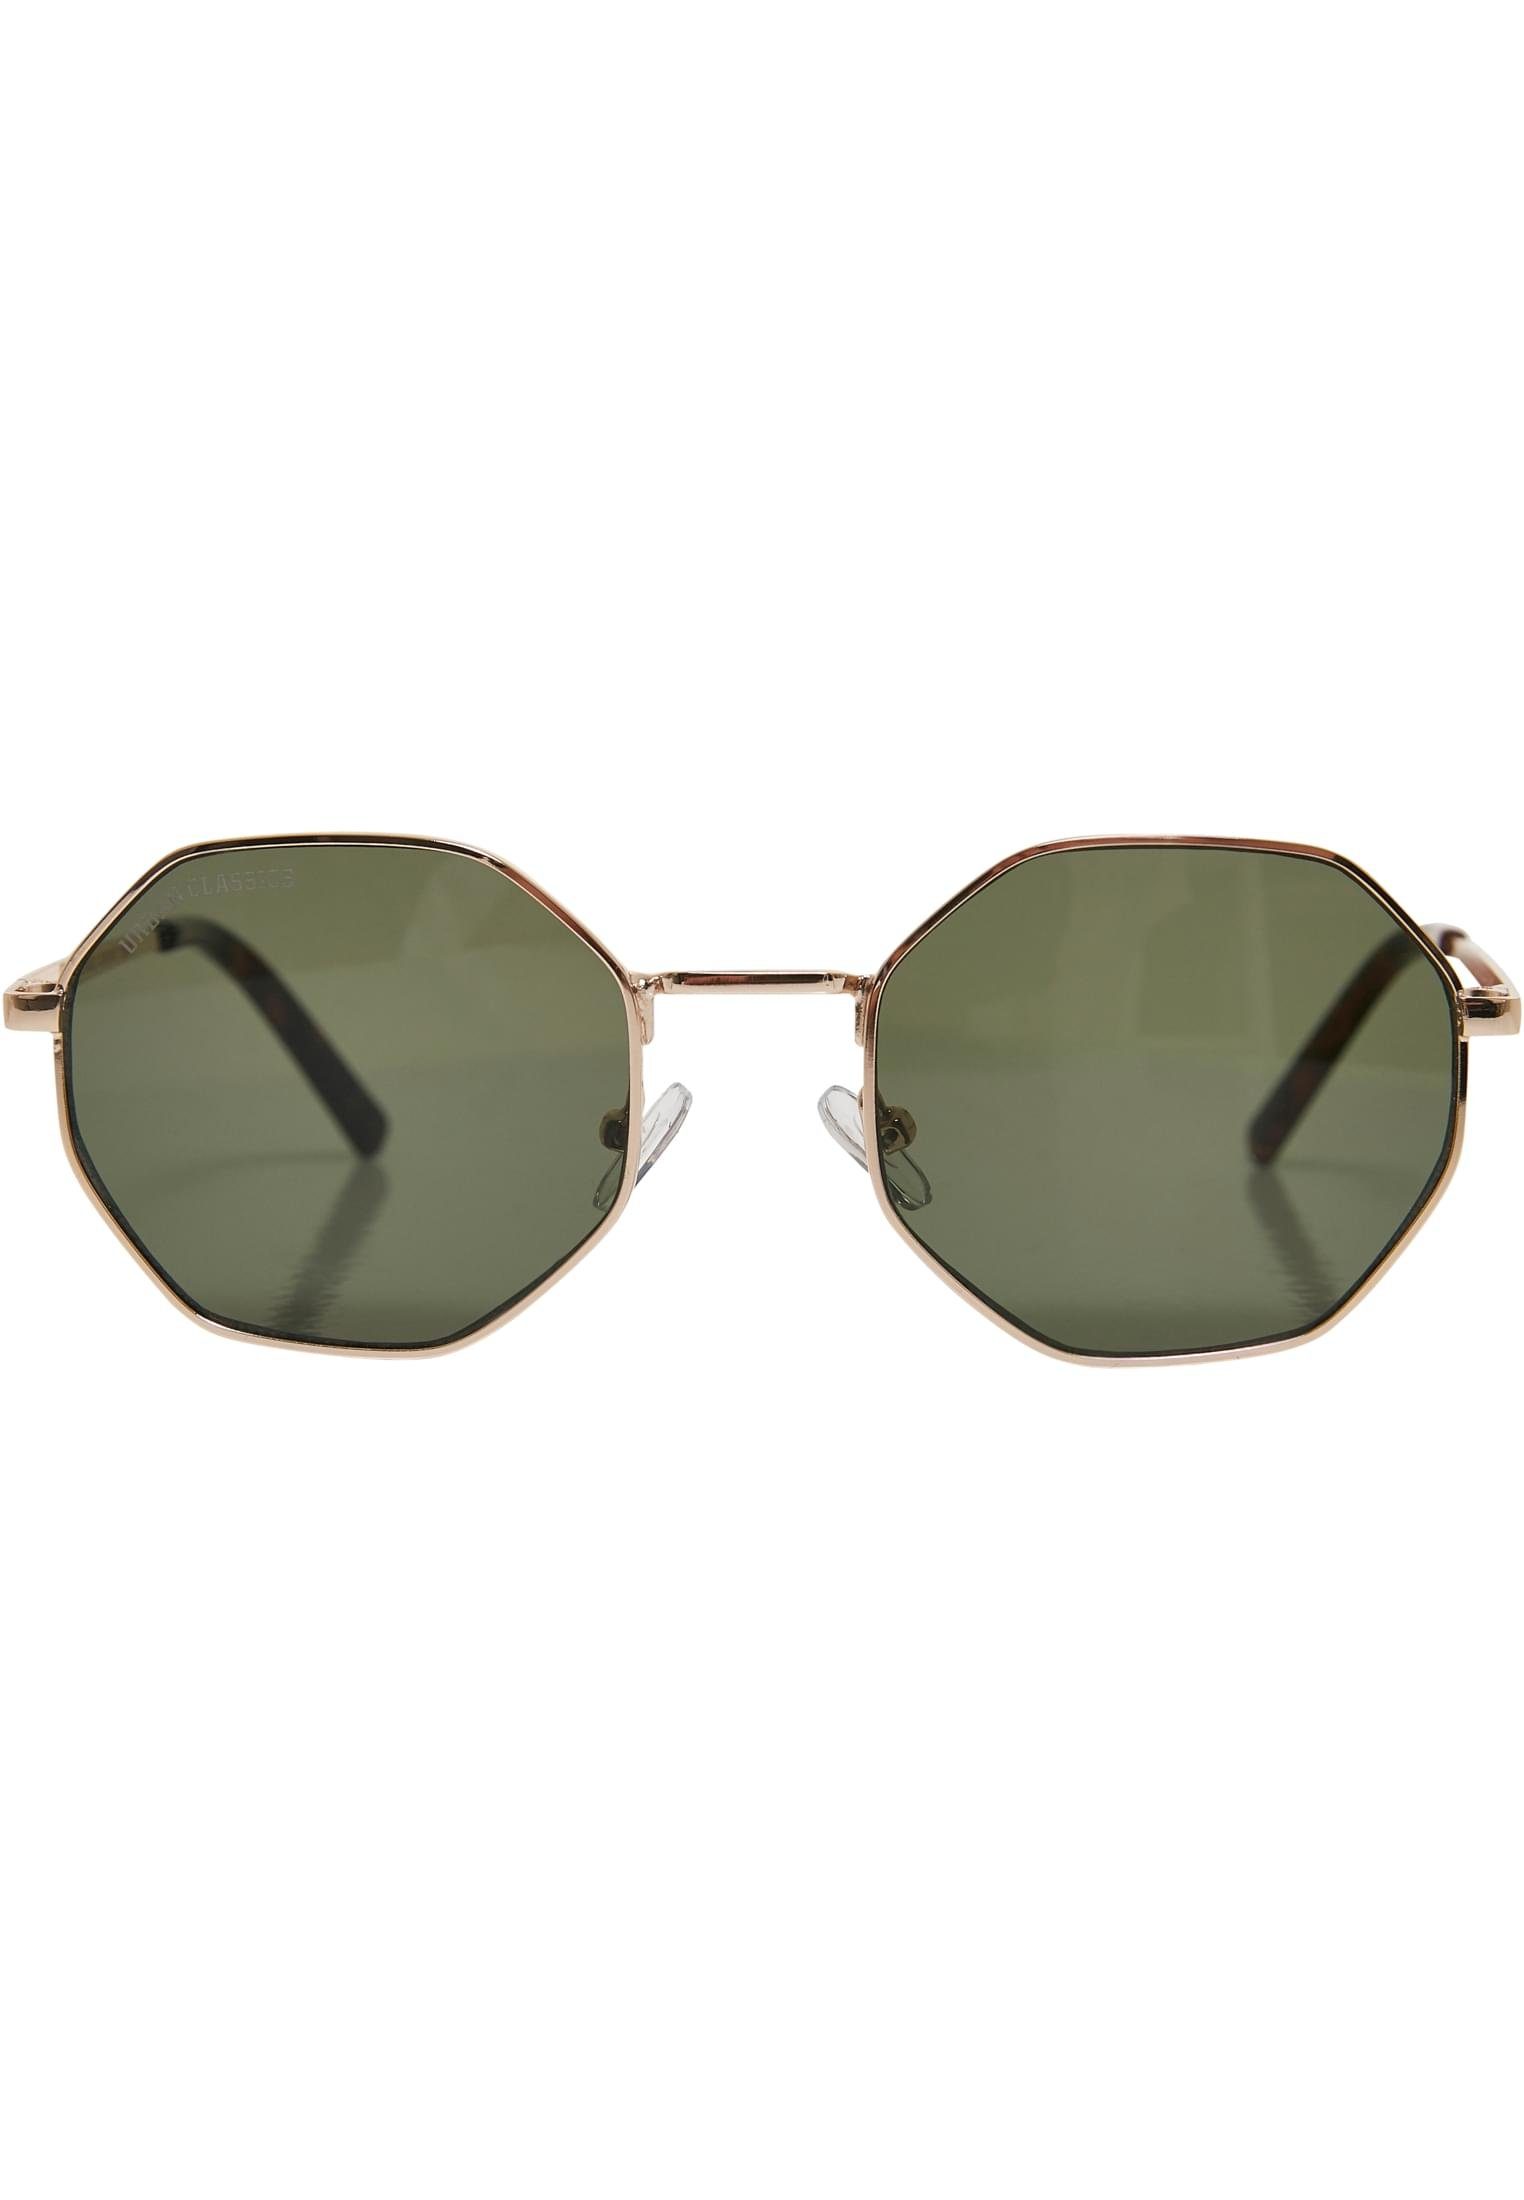 Sunglasses Sonnenbrille bottlegreen/gold CLASSICS URBAN Toronto Unisex